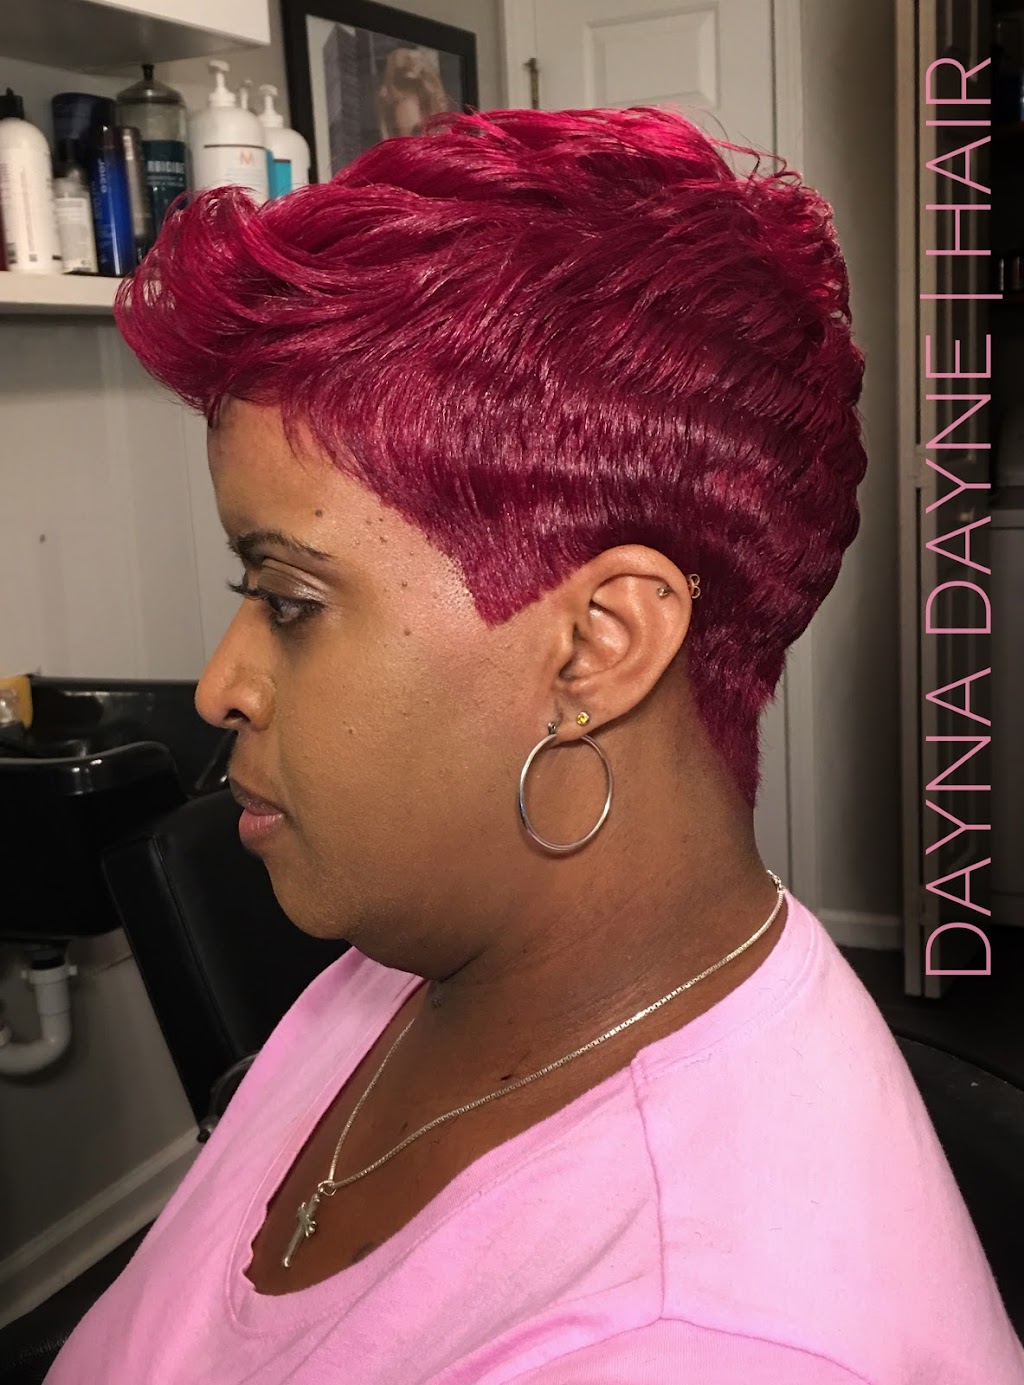 Dayna Dayne Hair | 4223 Glenroy Dr, Memphis, TN 38125 | Phone: (901) 502-7431